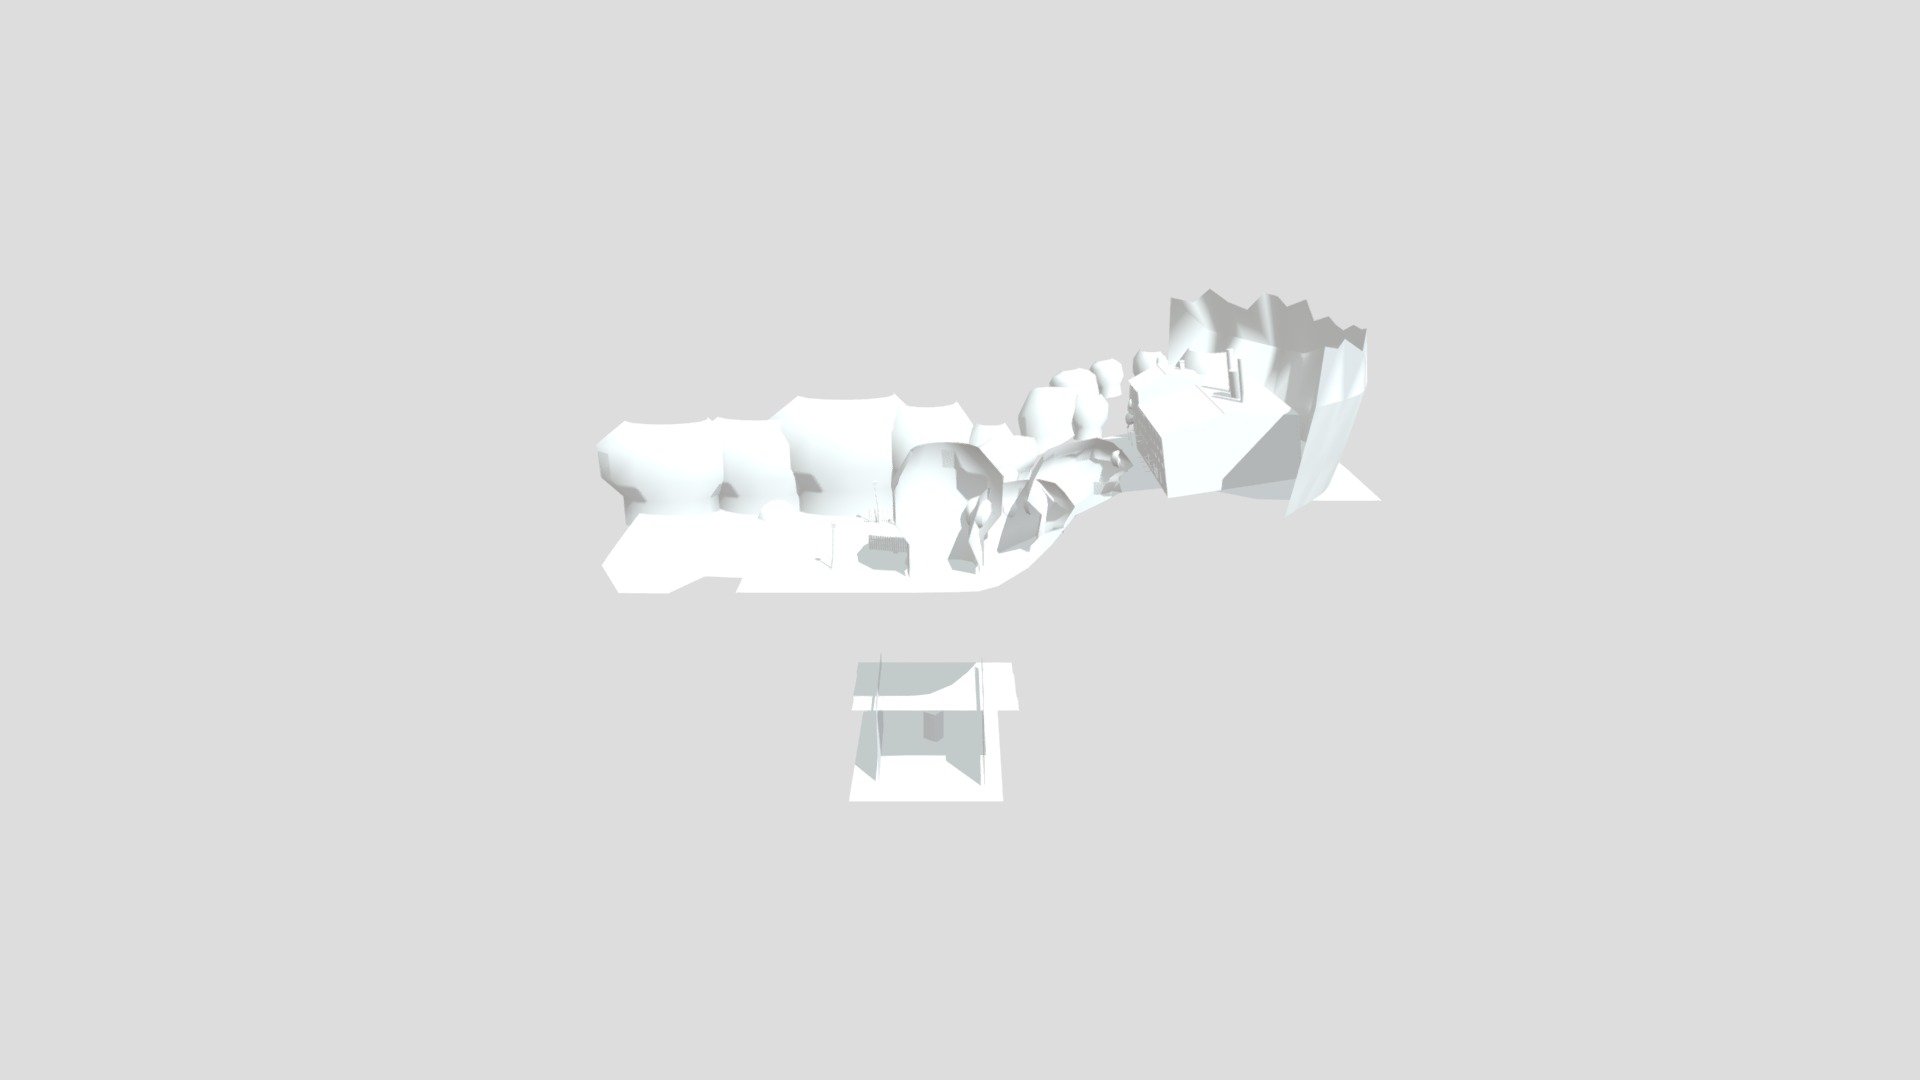 Ice scream - A 3D model collection by nadyalyny - Sketchfab